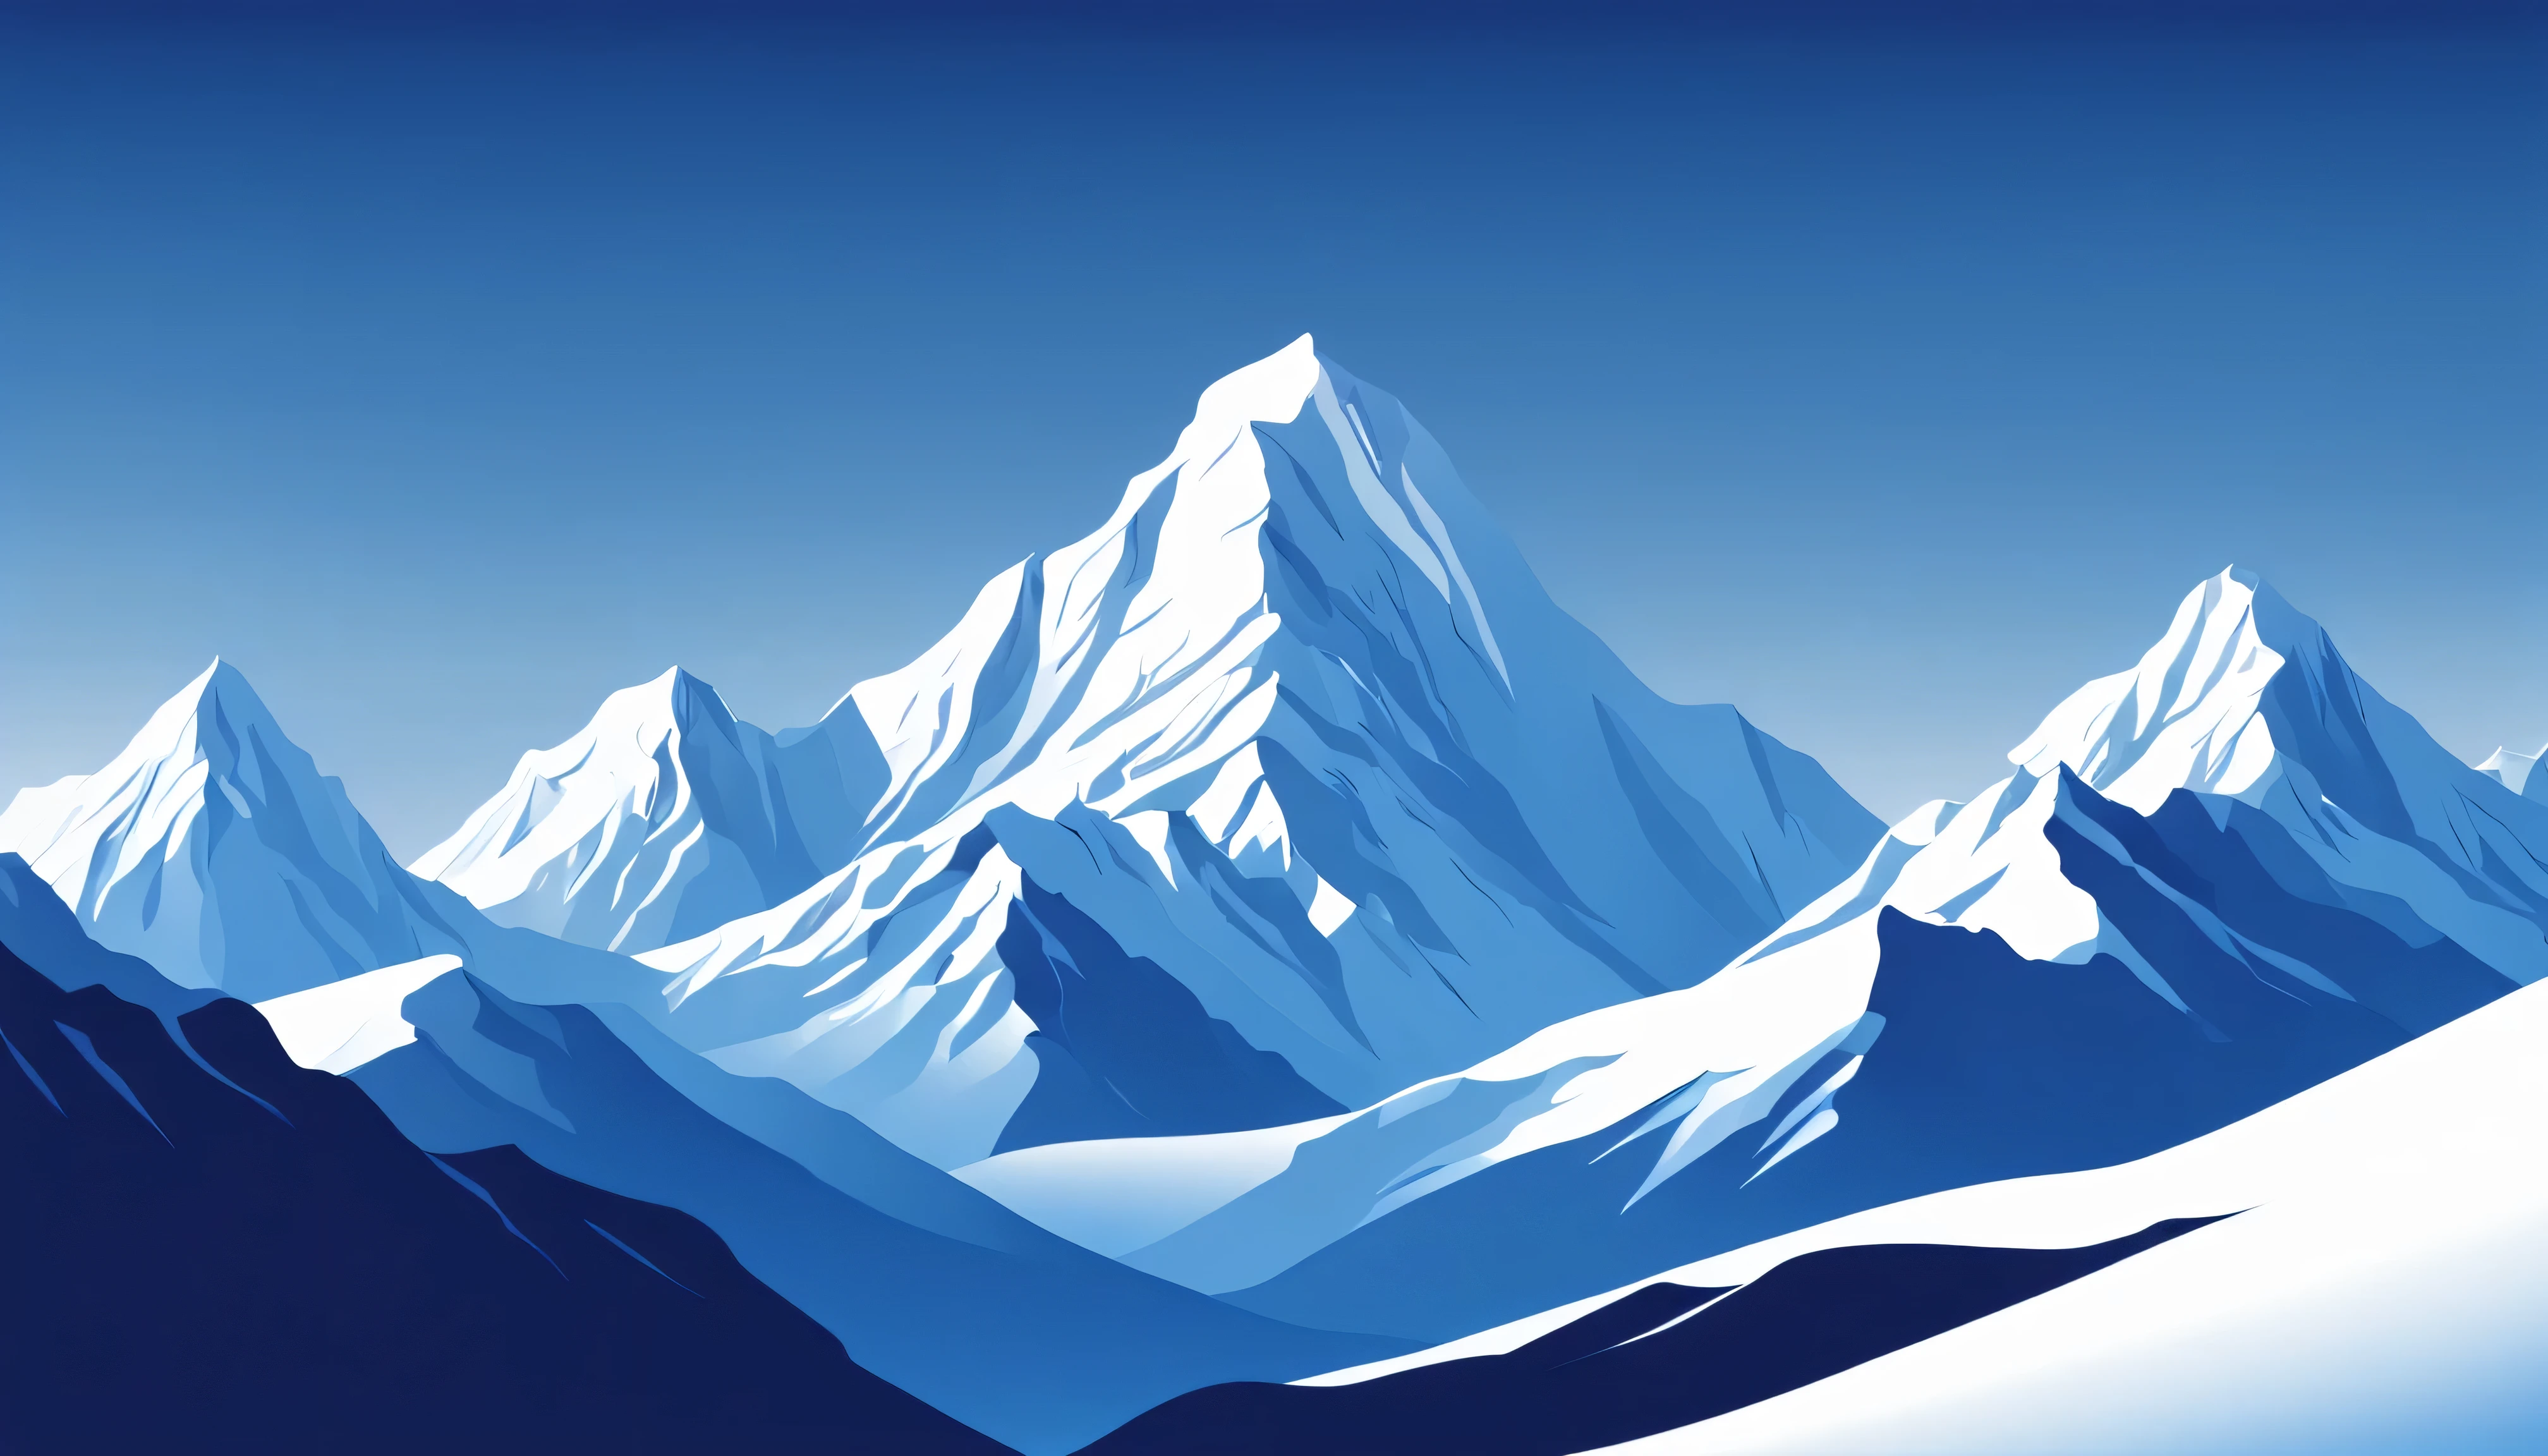 epic mountain scenery, snow capped peaks, gentle curves, deep blue sky, serene, (simplistic, vector style)